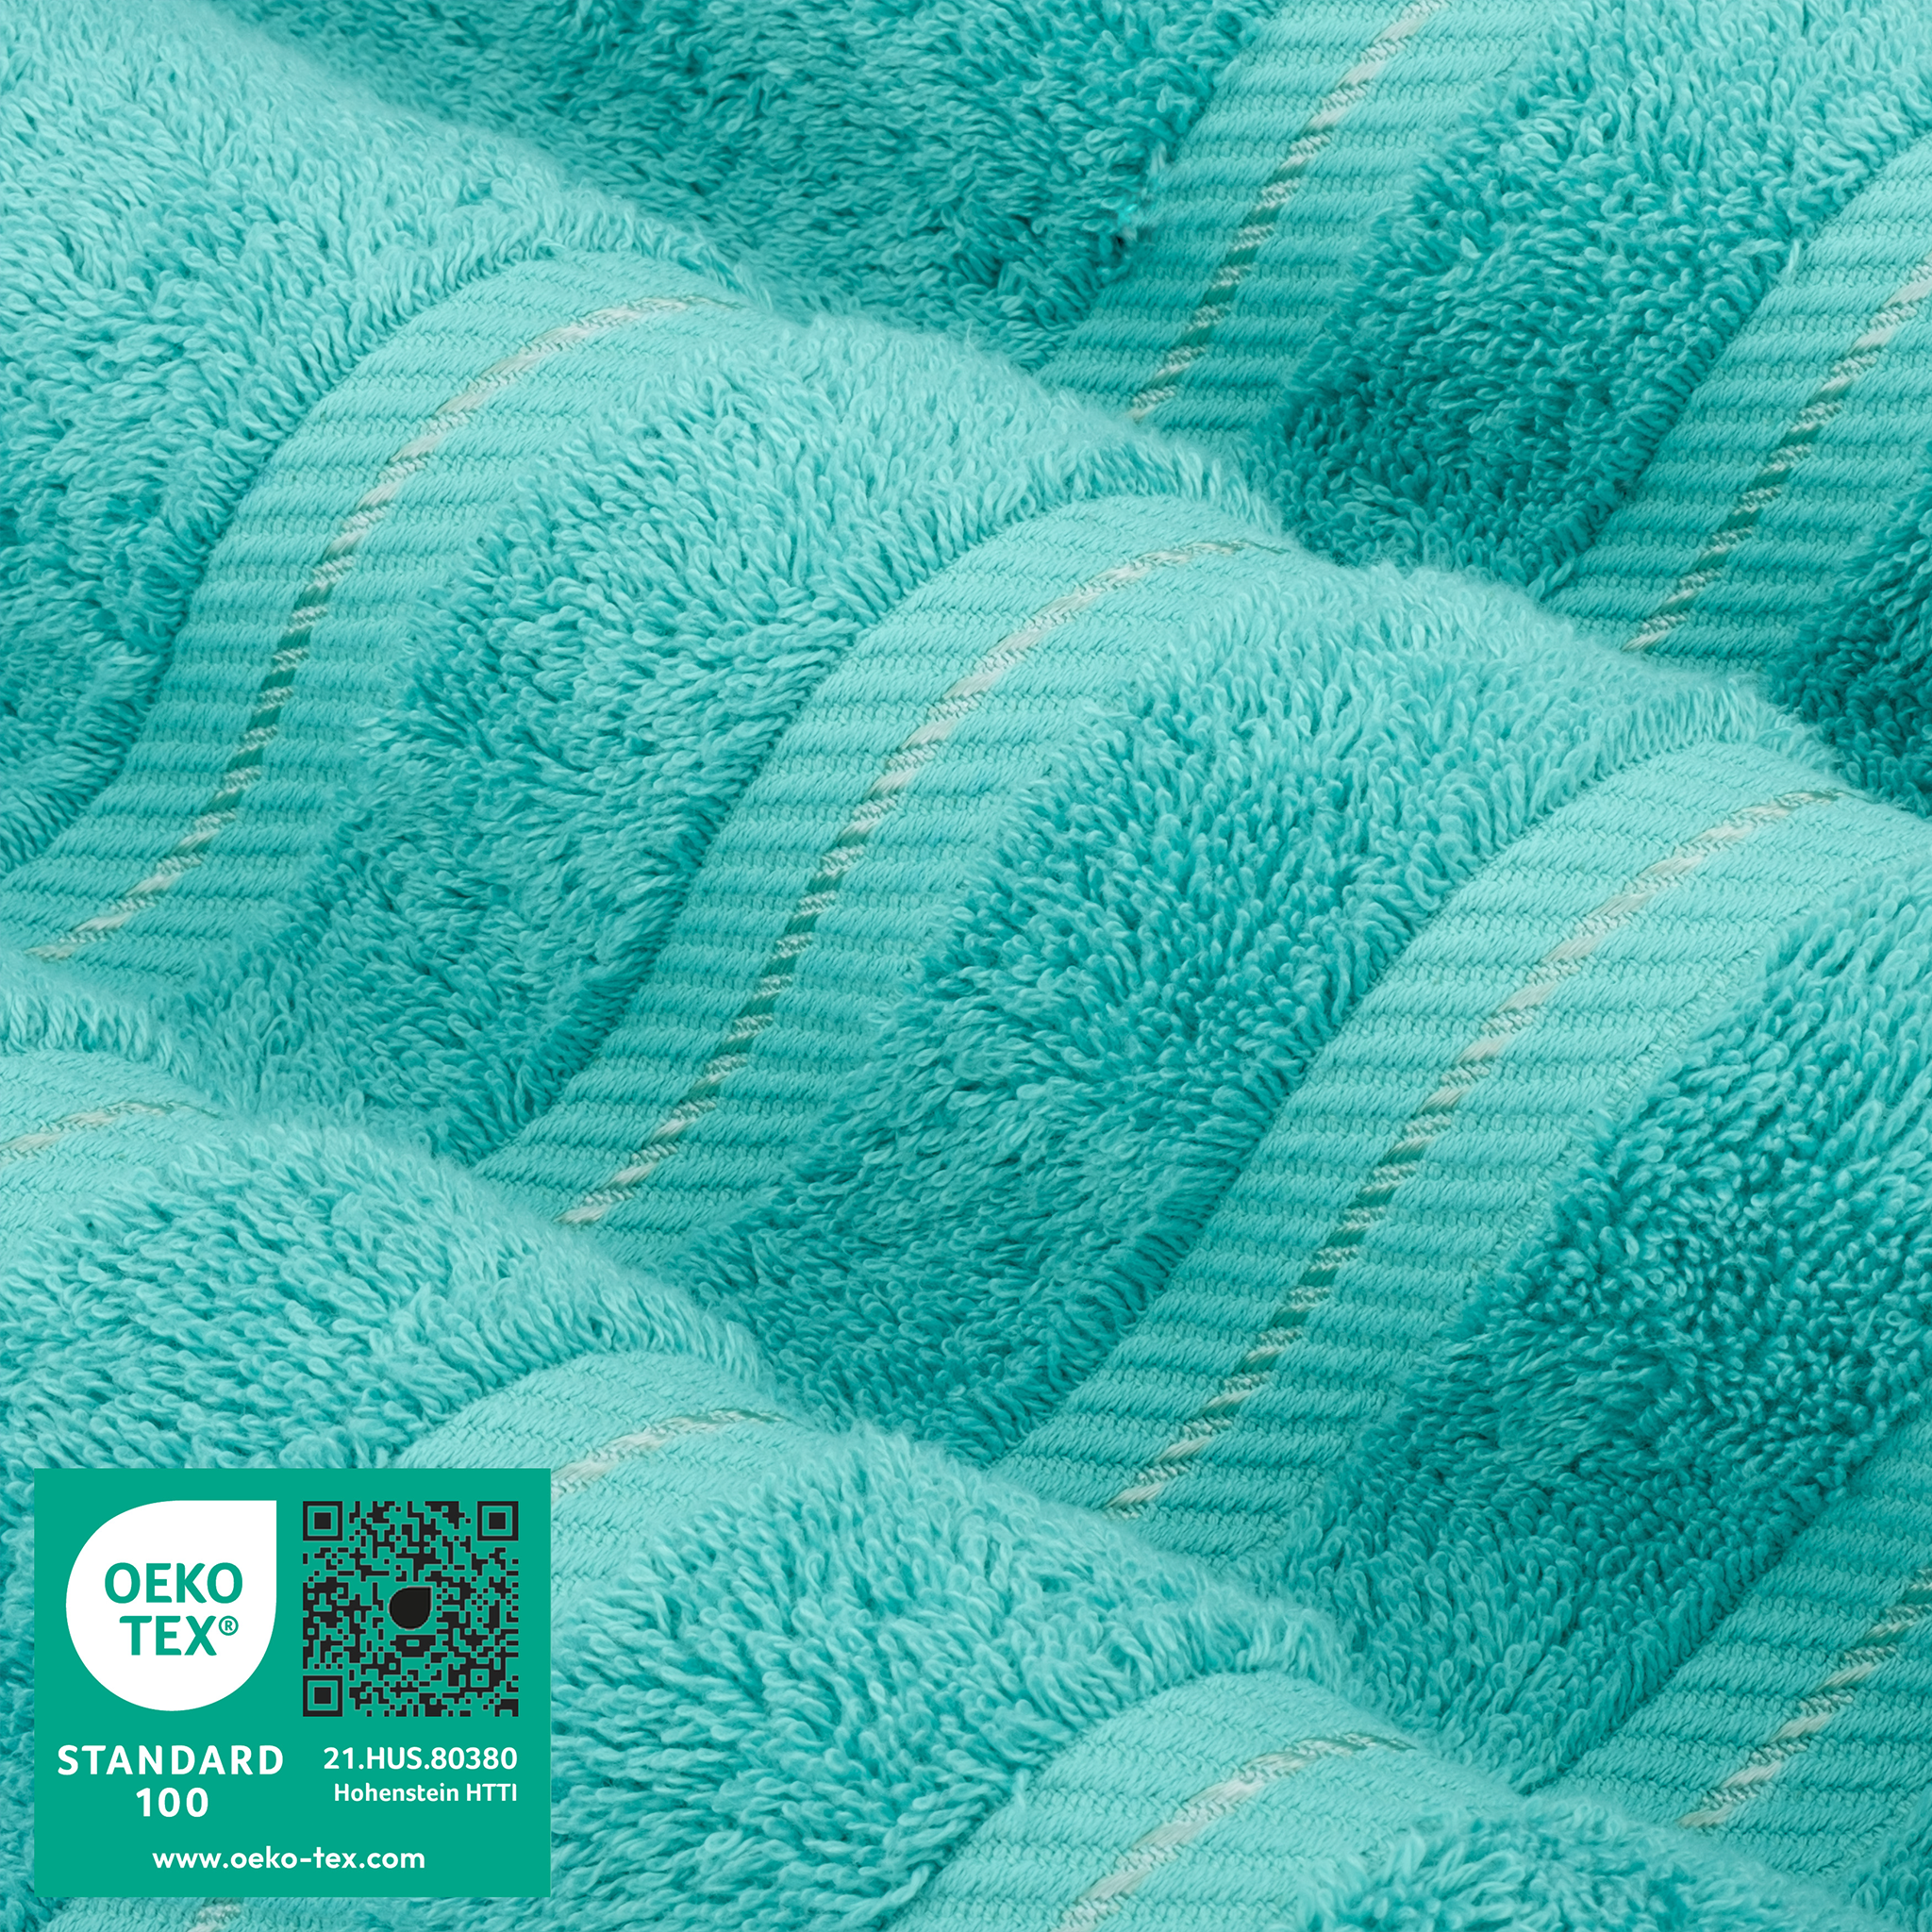 American Soft Linen - Single Piece Turkish Cotton Hand Towels - Turquoise-Blue - 3